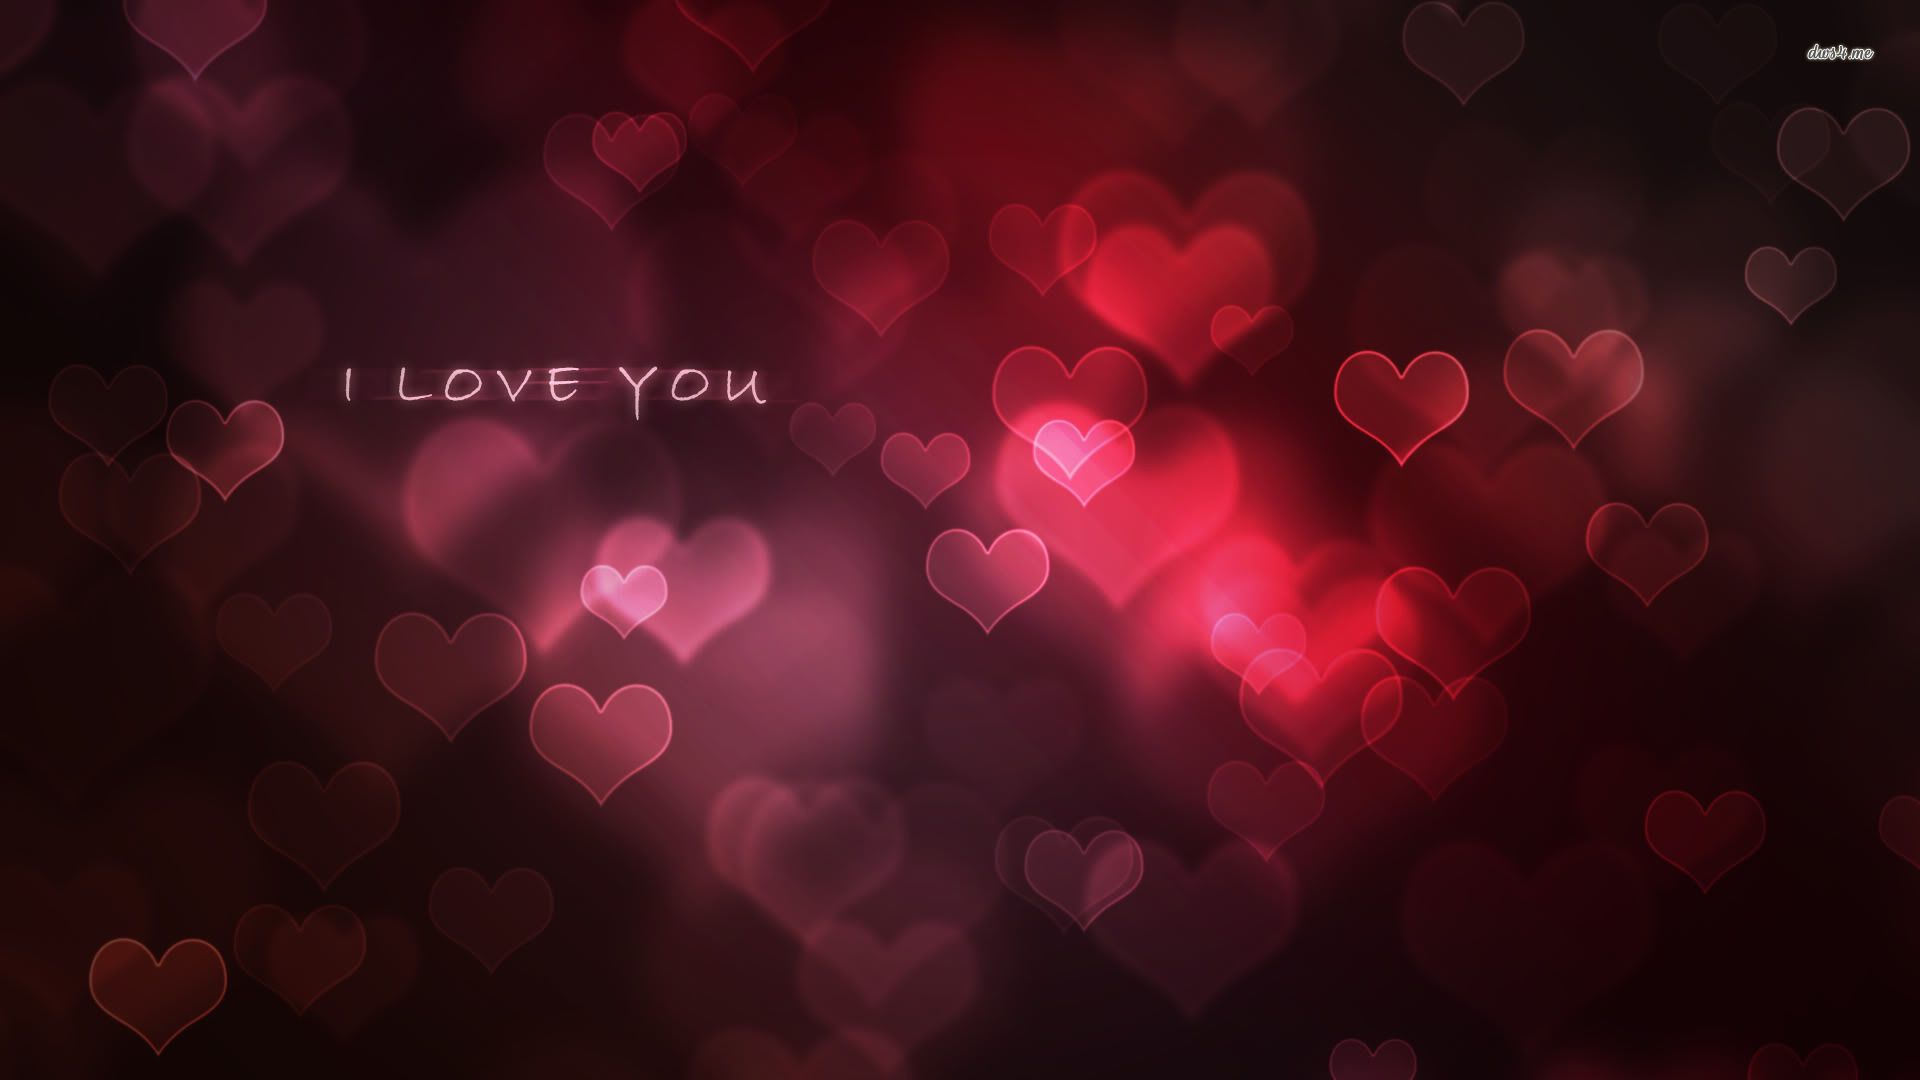 30 Beautiful Love & Heart Wallpapers | Tech-Lovers l Web Design ...